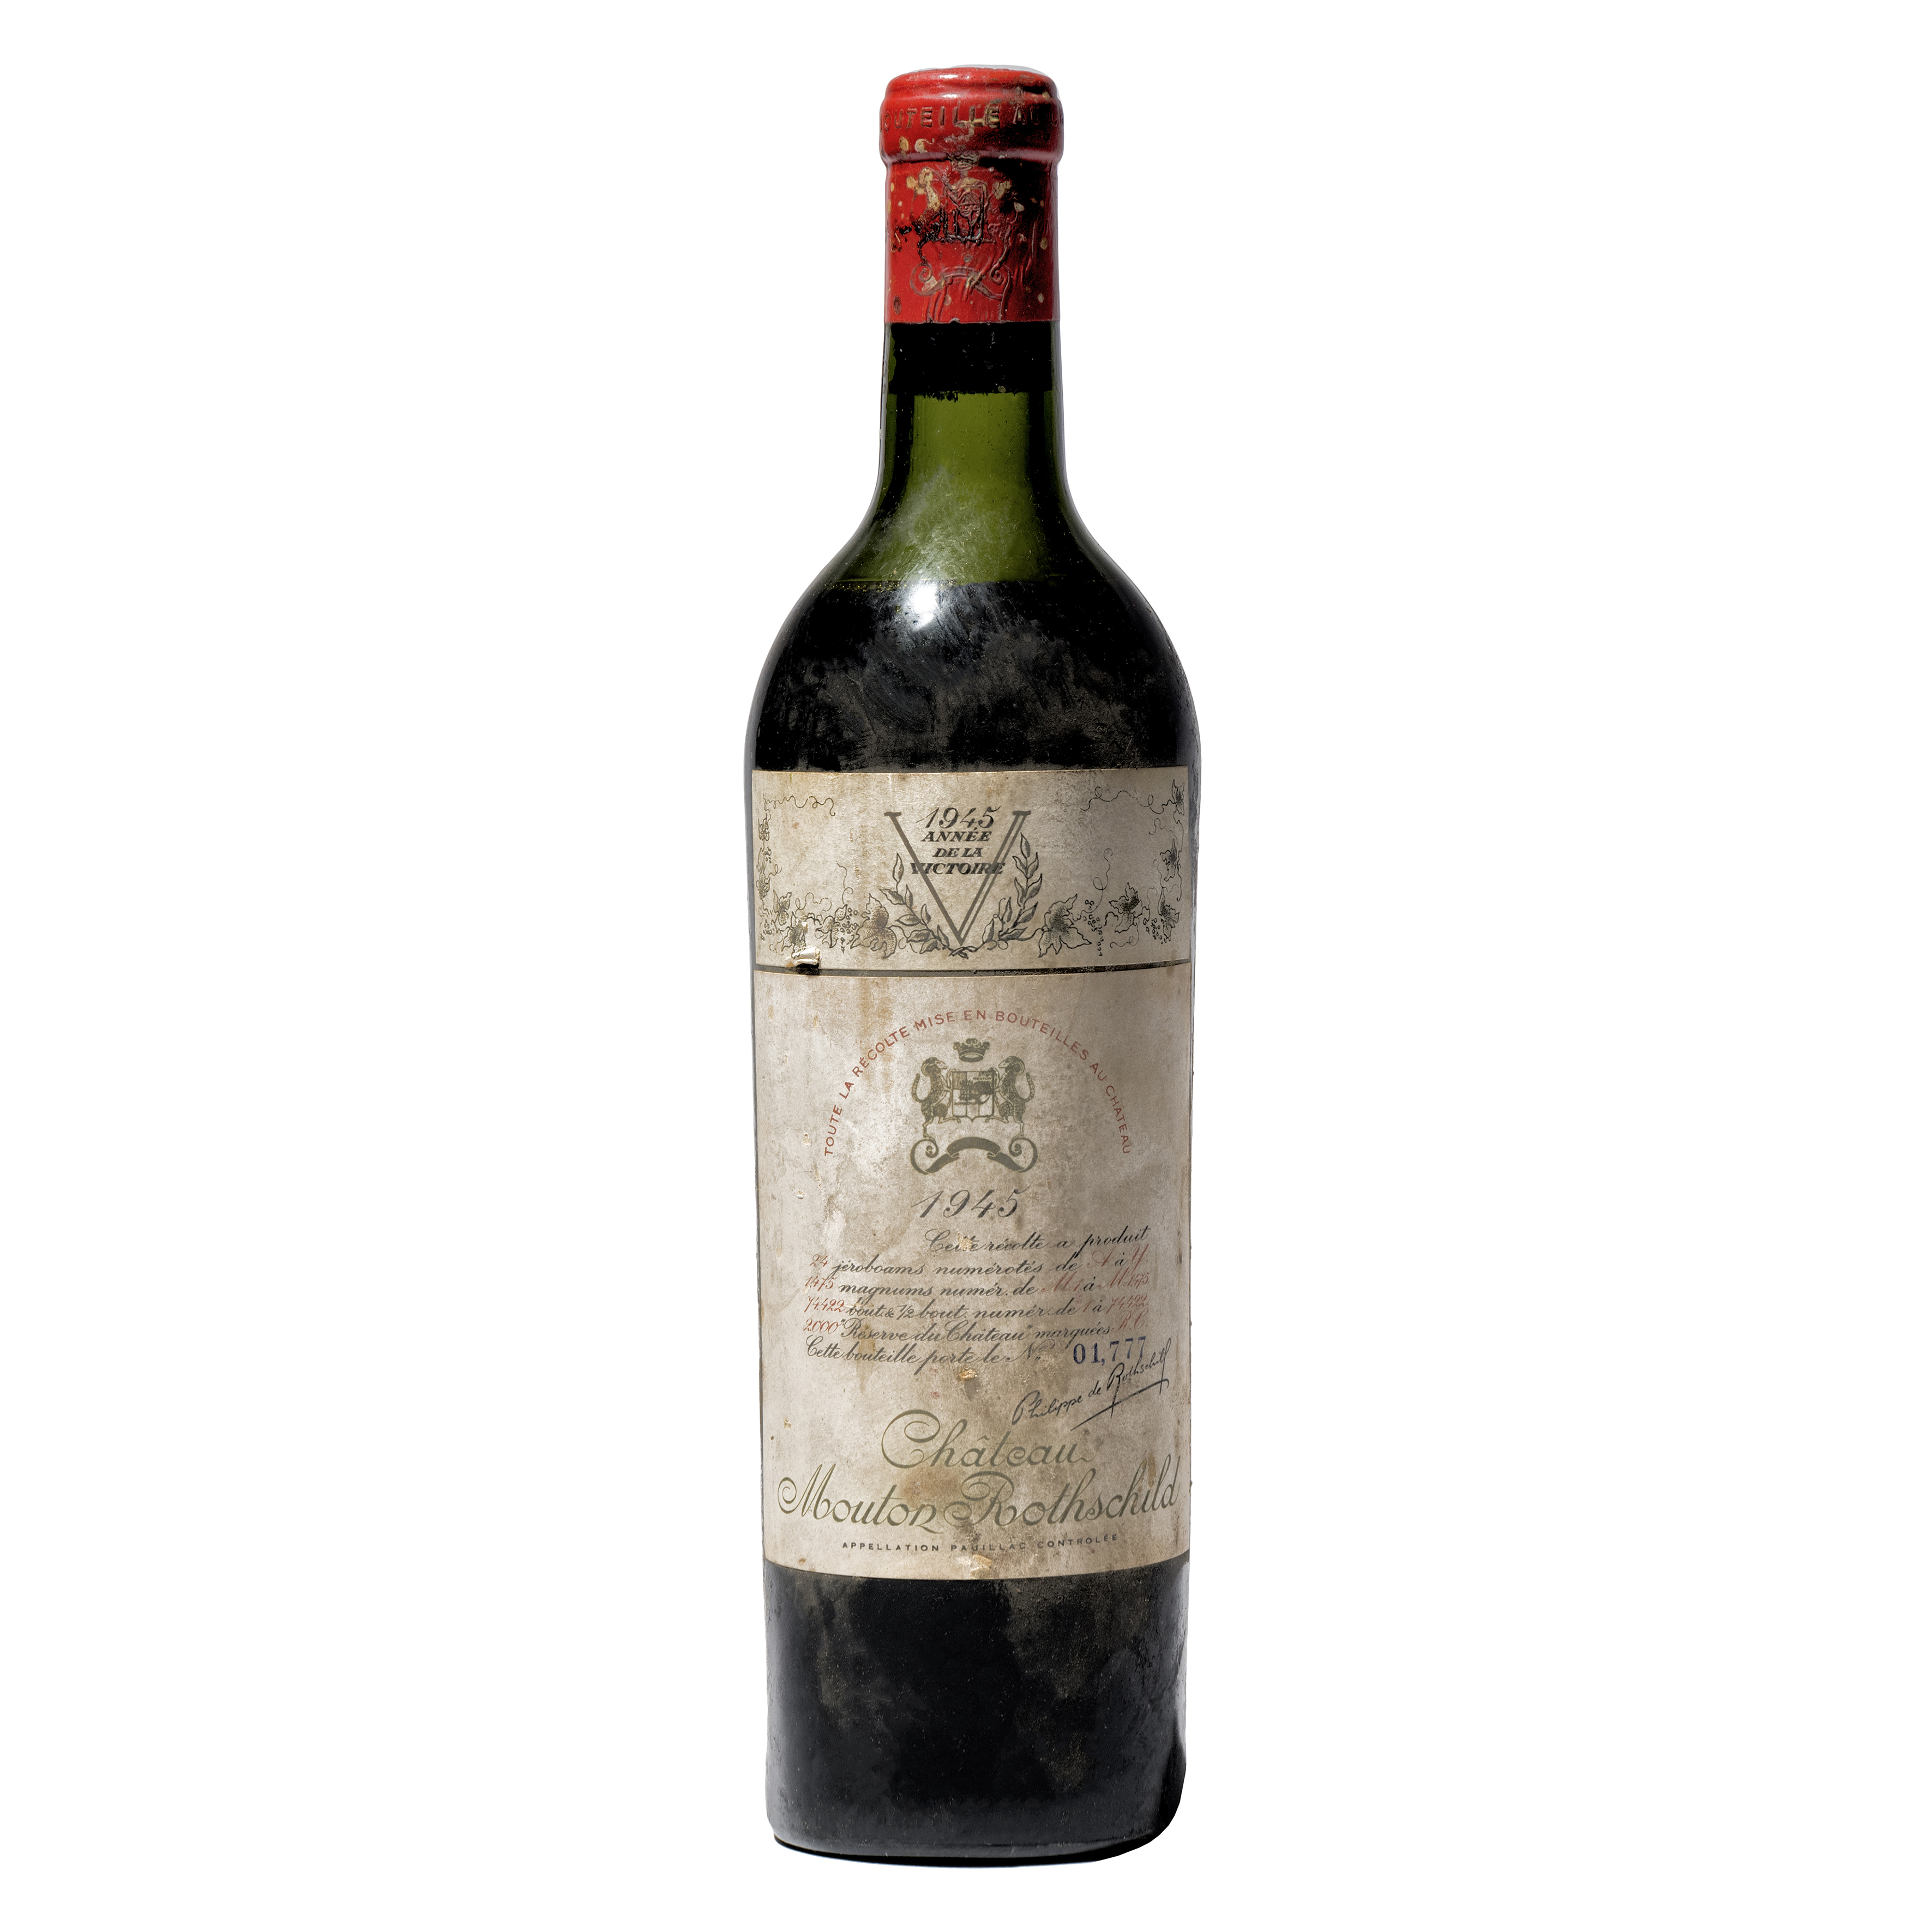 1 bottle 1945 Chateau Mouton-Rothschild